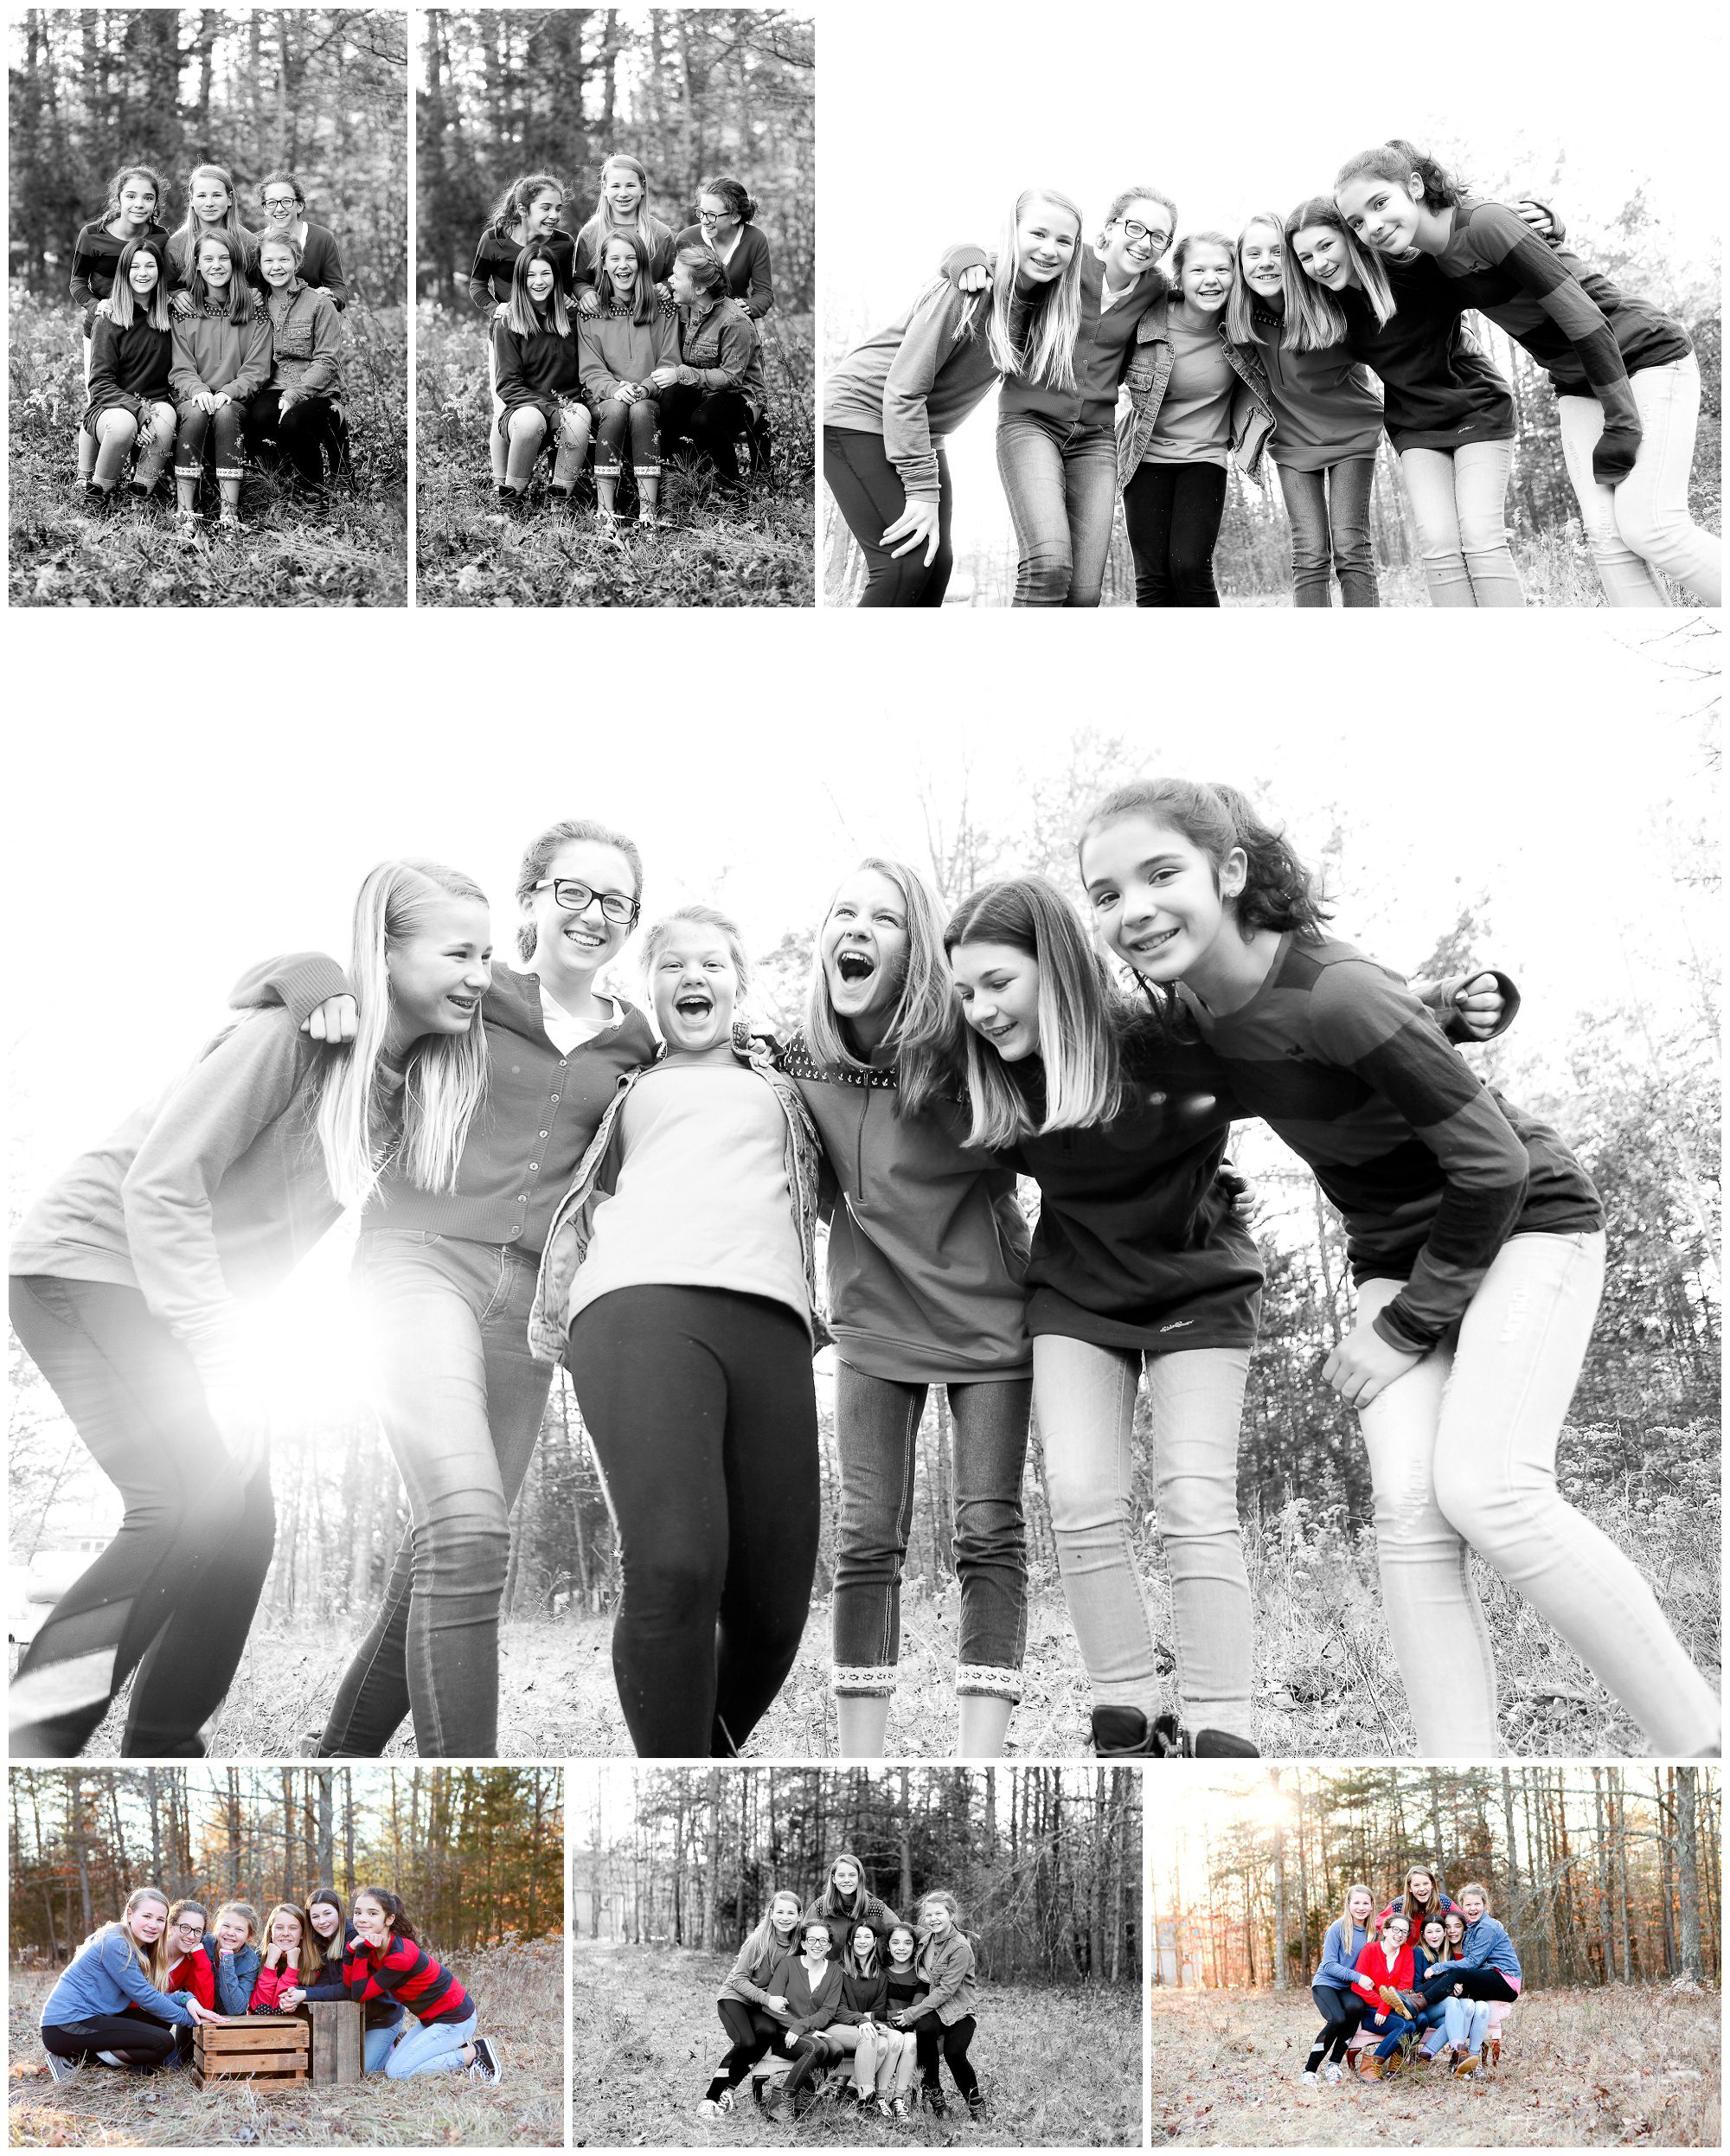 charlottesville friends 13 thirteen teenager tween portraits girls teens pictrues photographer fun friendship